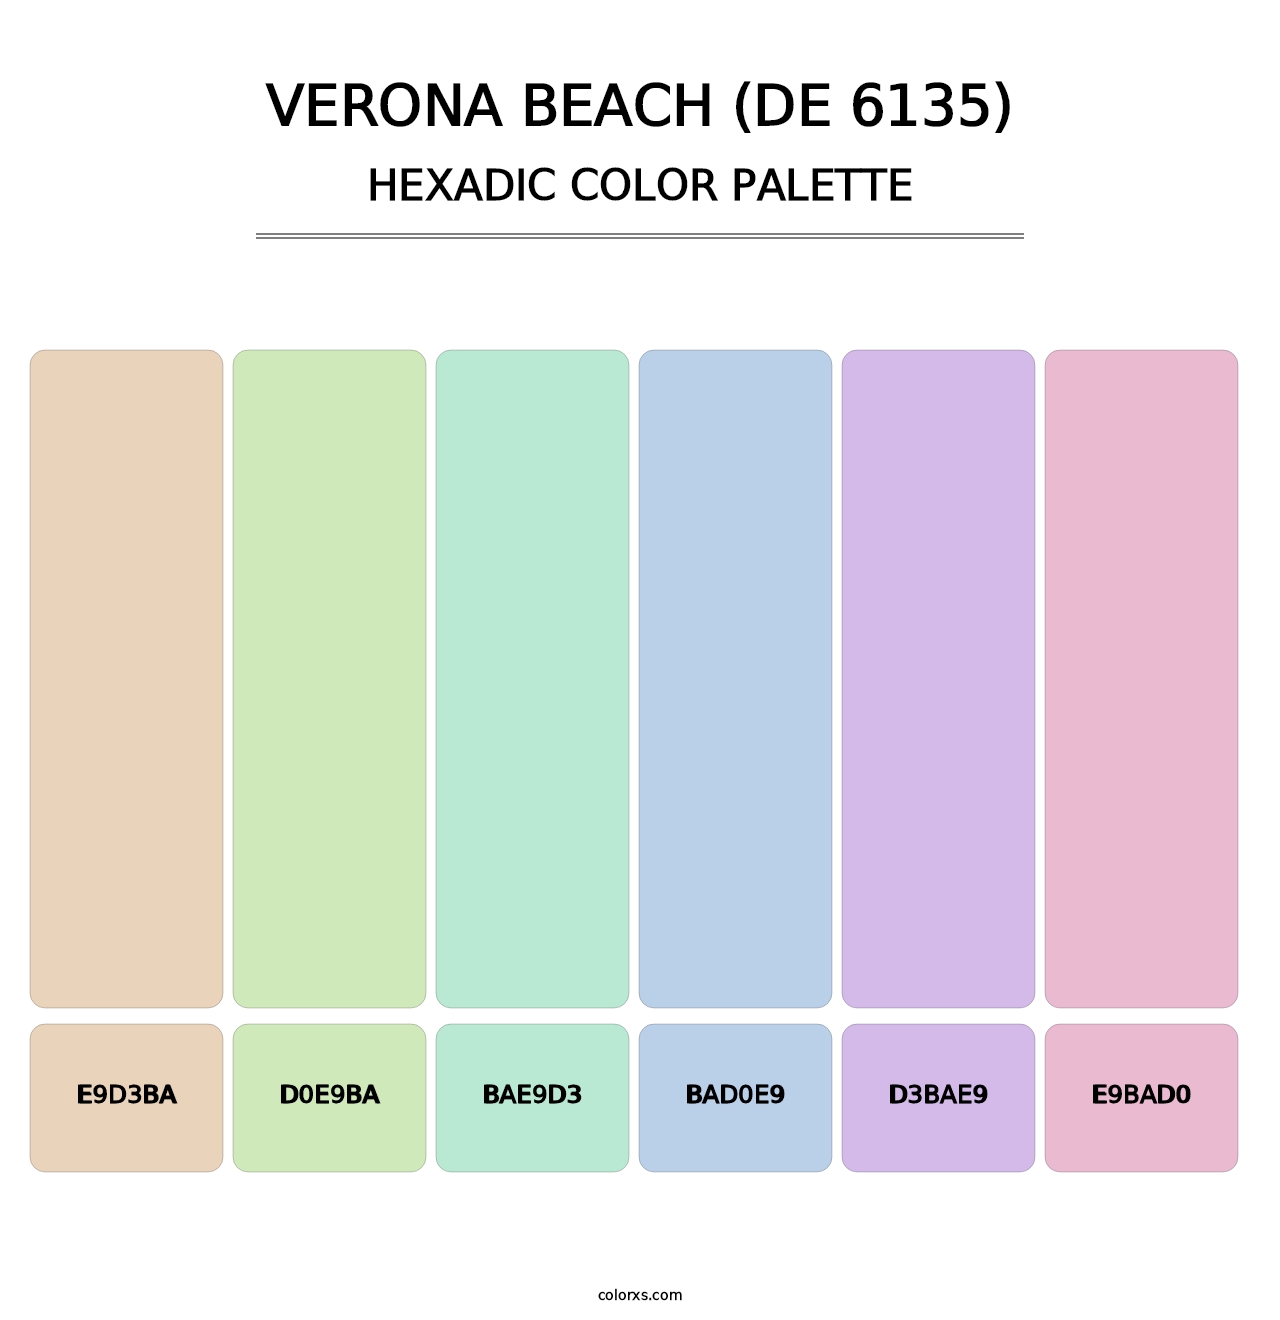 Verona Beach (DE 6135) - Hexadic Color Palette